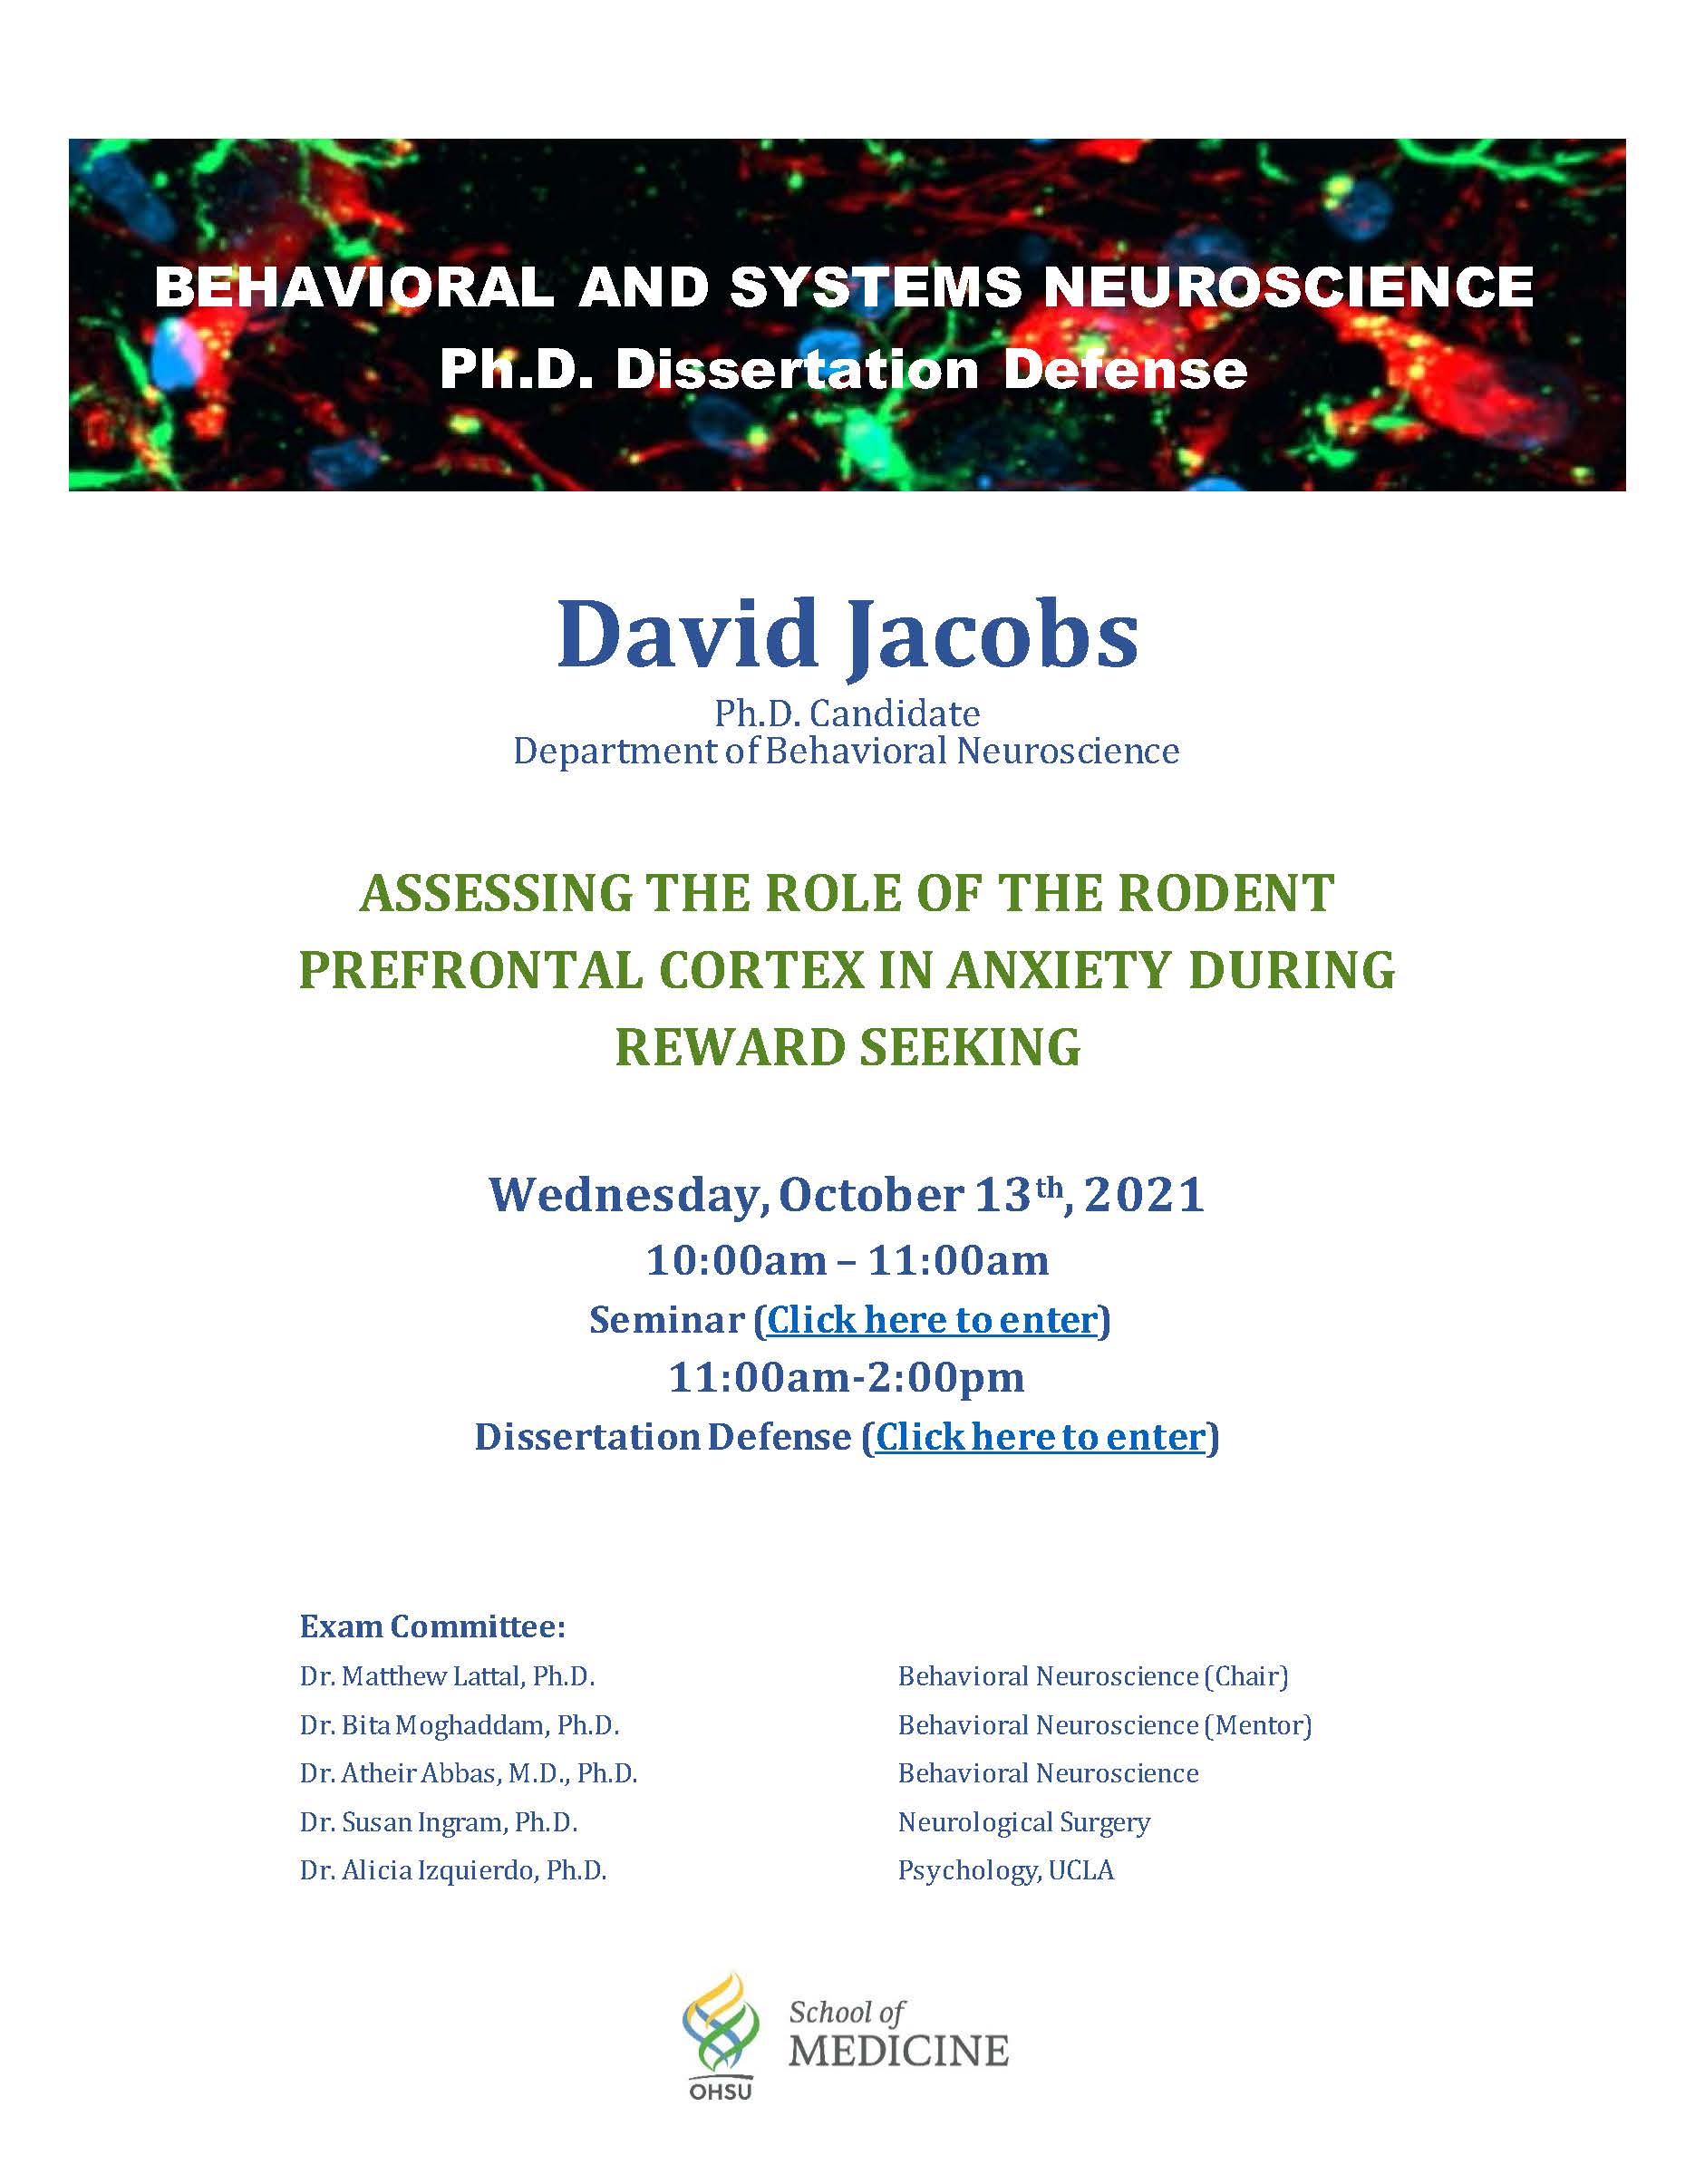 David Jacobs Ph.D. Dissertation Defense Flyer